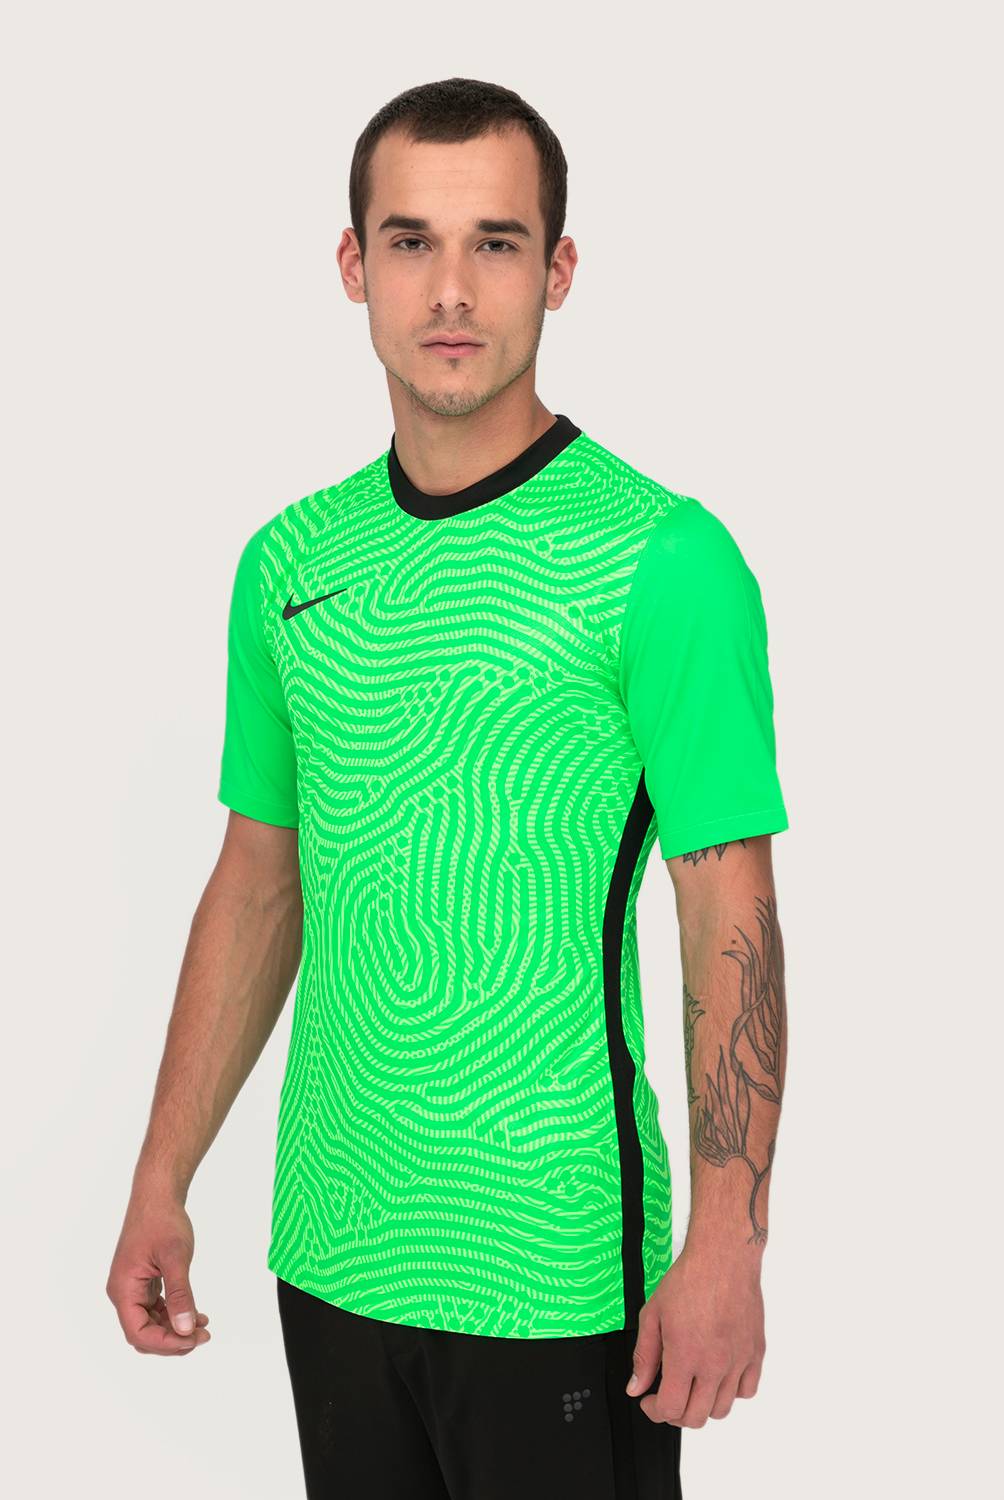 NIKE - Camiseta Chile Hombre Fútbol Prematch